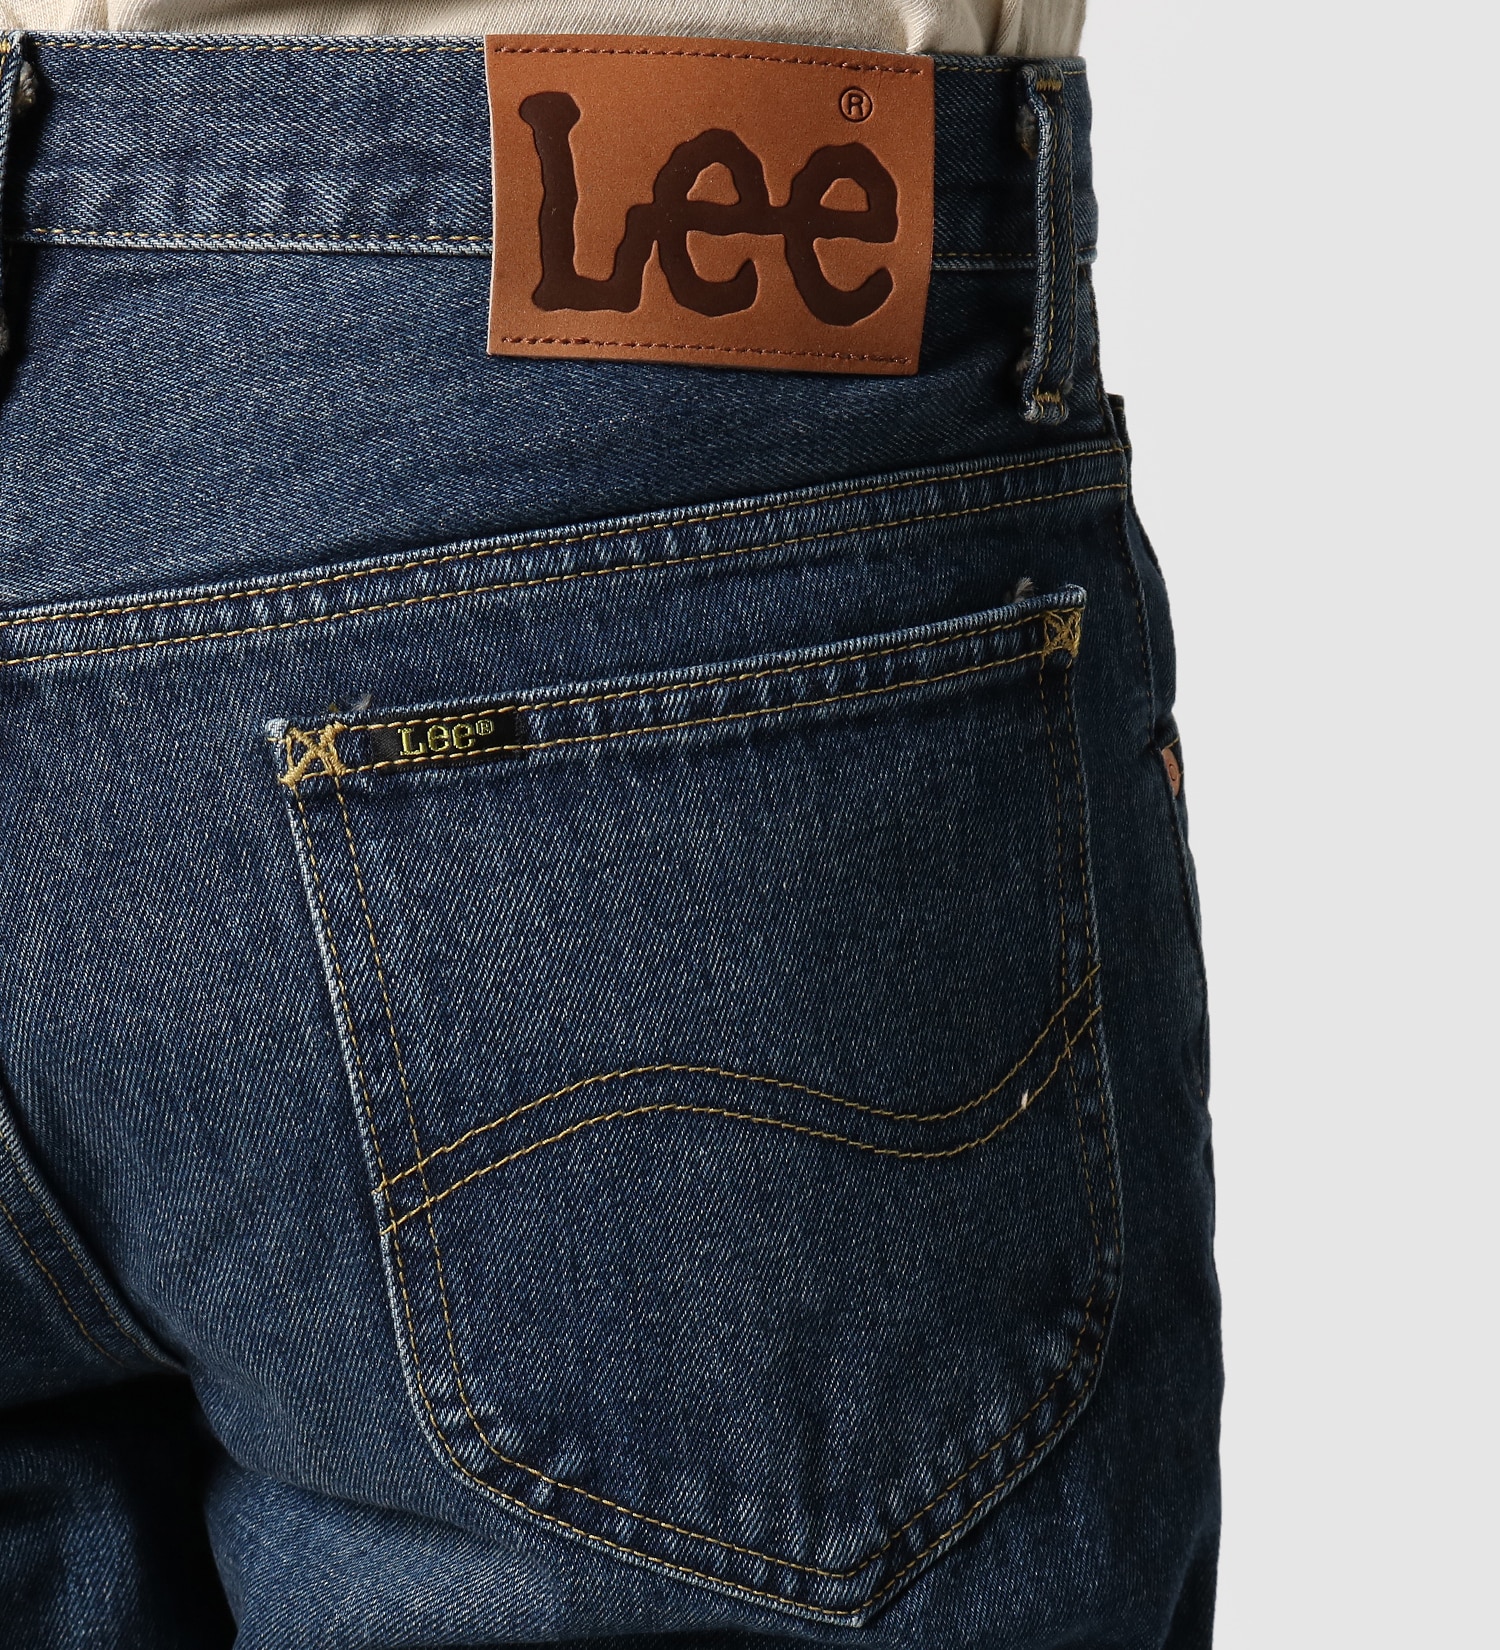 Lee(リー)のAMERICAN STANDARD 200 フルカットジーンズ|パンツ/デニムパンツ/メンズ|中色ブルー